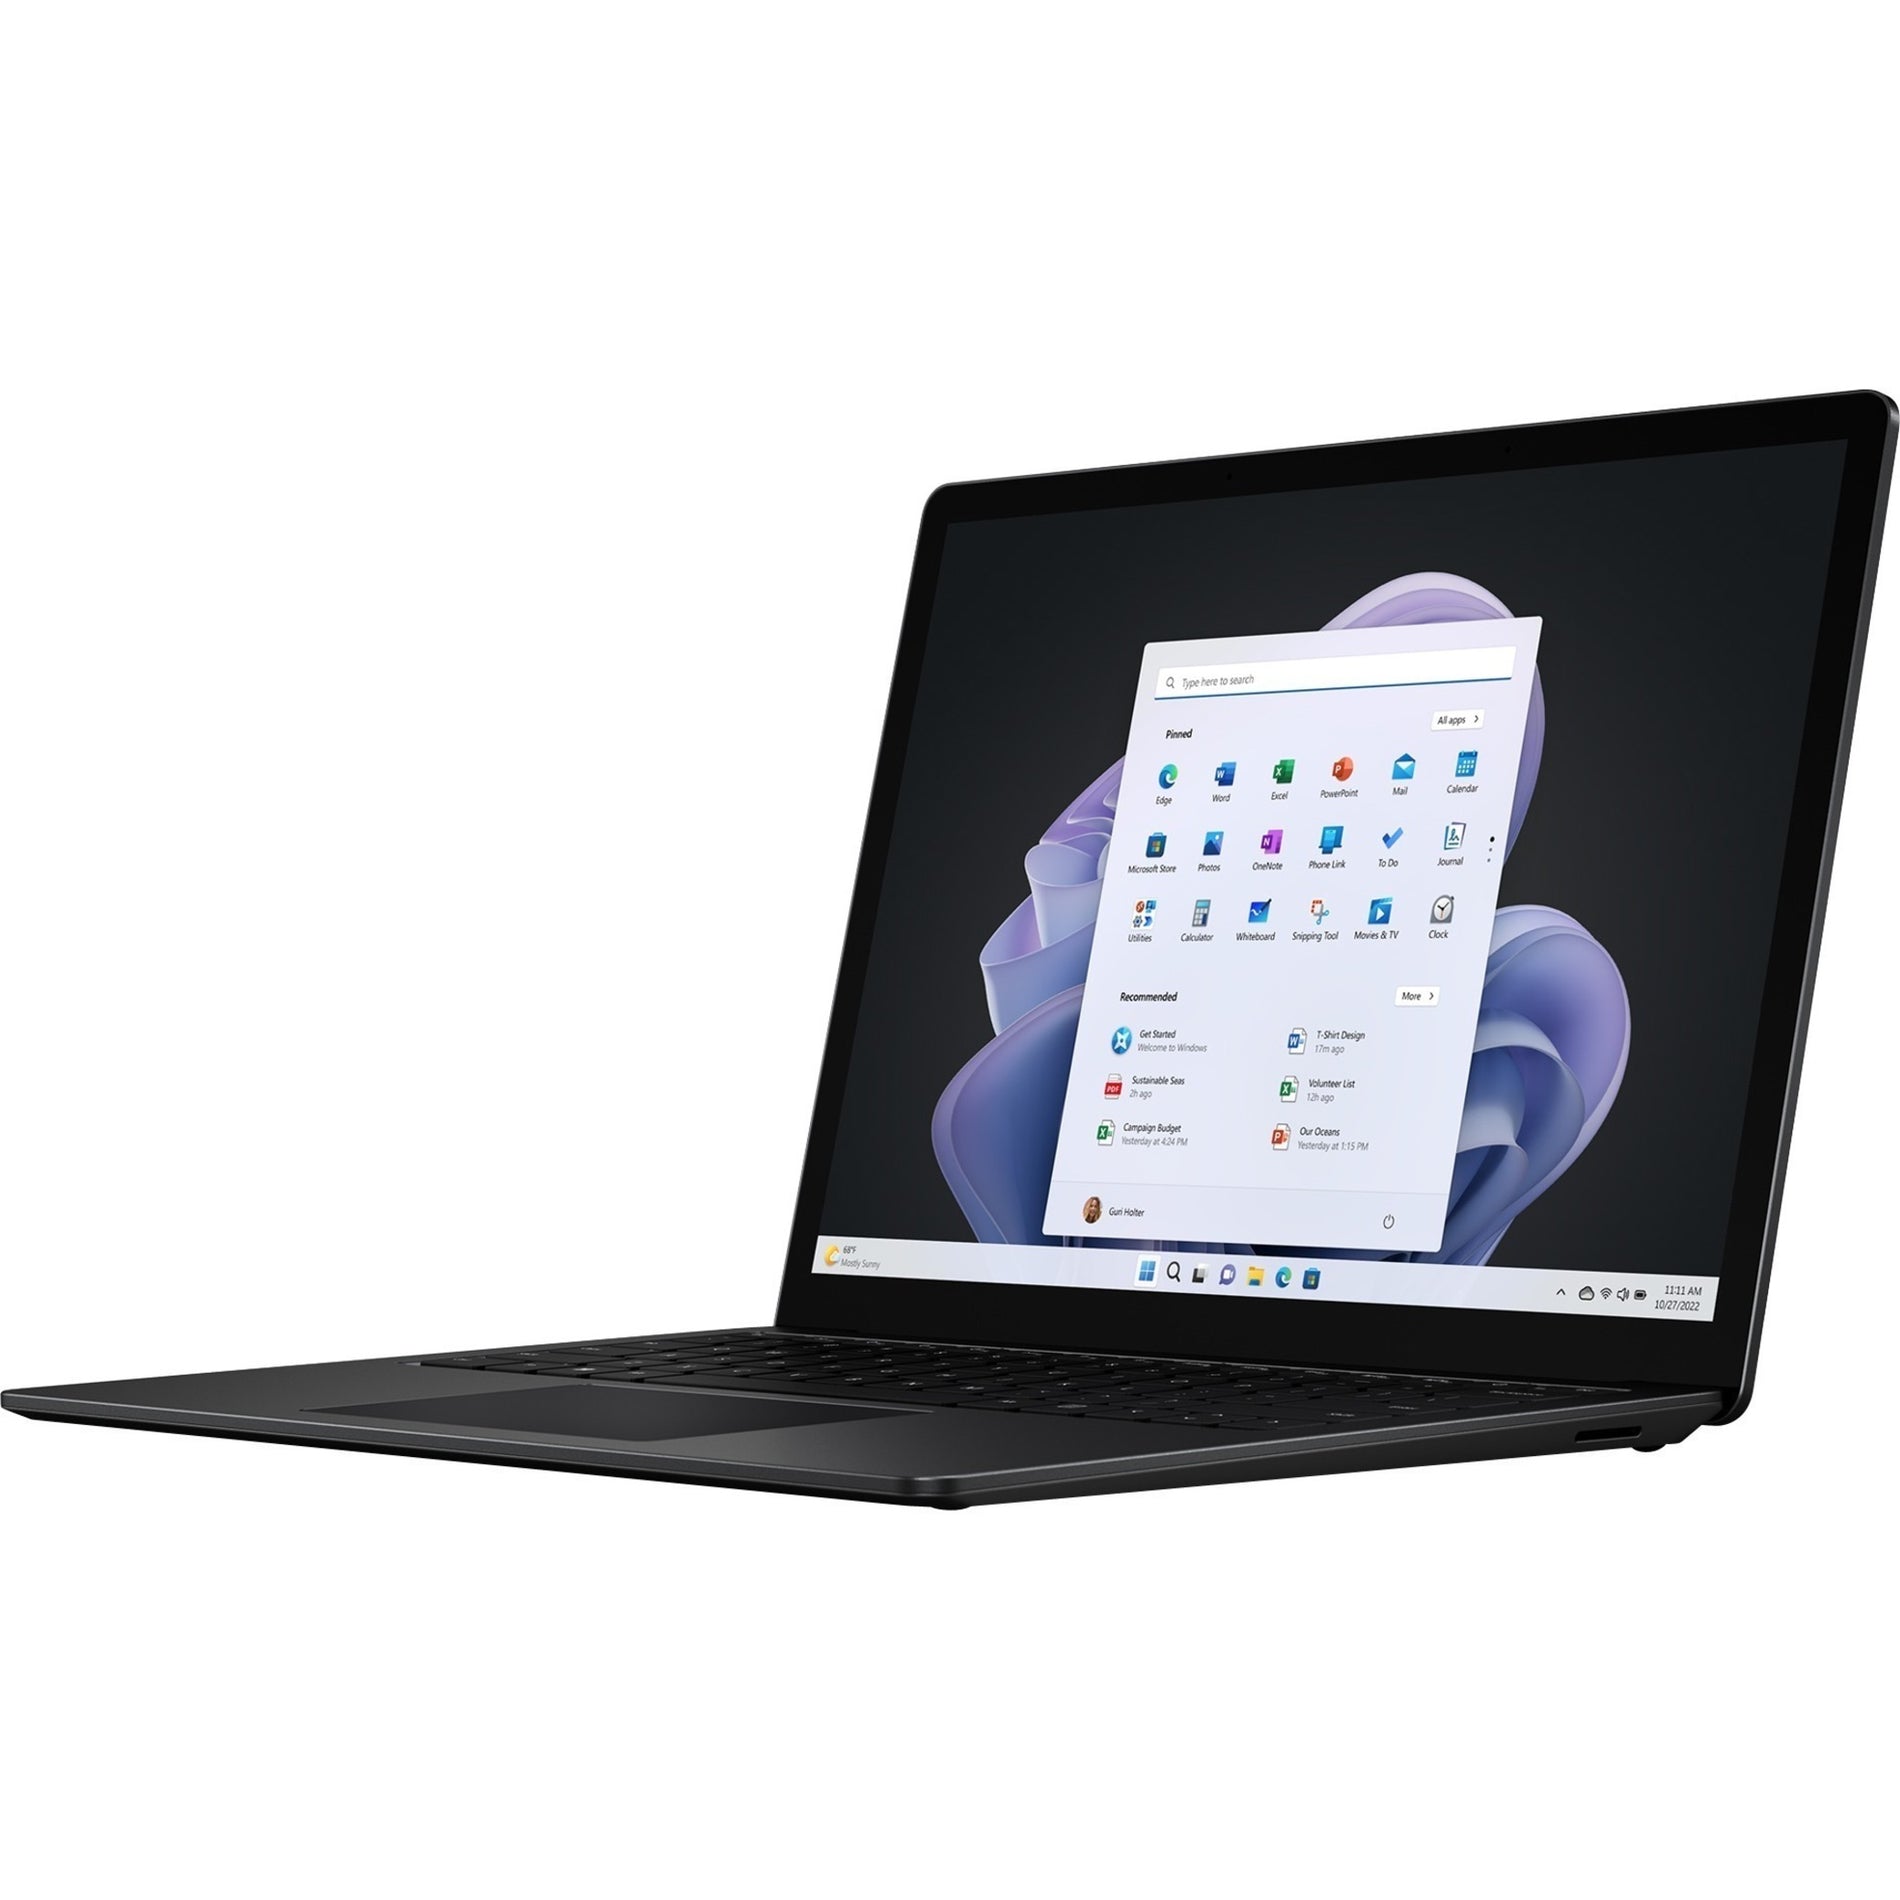 Microsoft RBA-00001 Surface Laptop 5 Notebook, 13.5" Touchscreen, Core i7, 16GB RAM, 256GB SSD, Windows 10 Pro